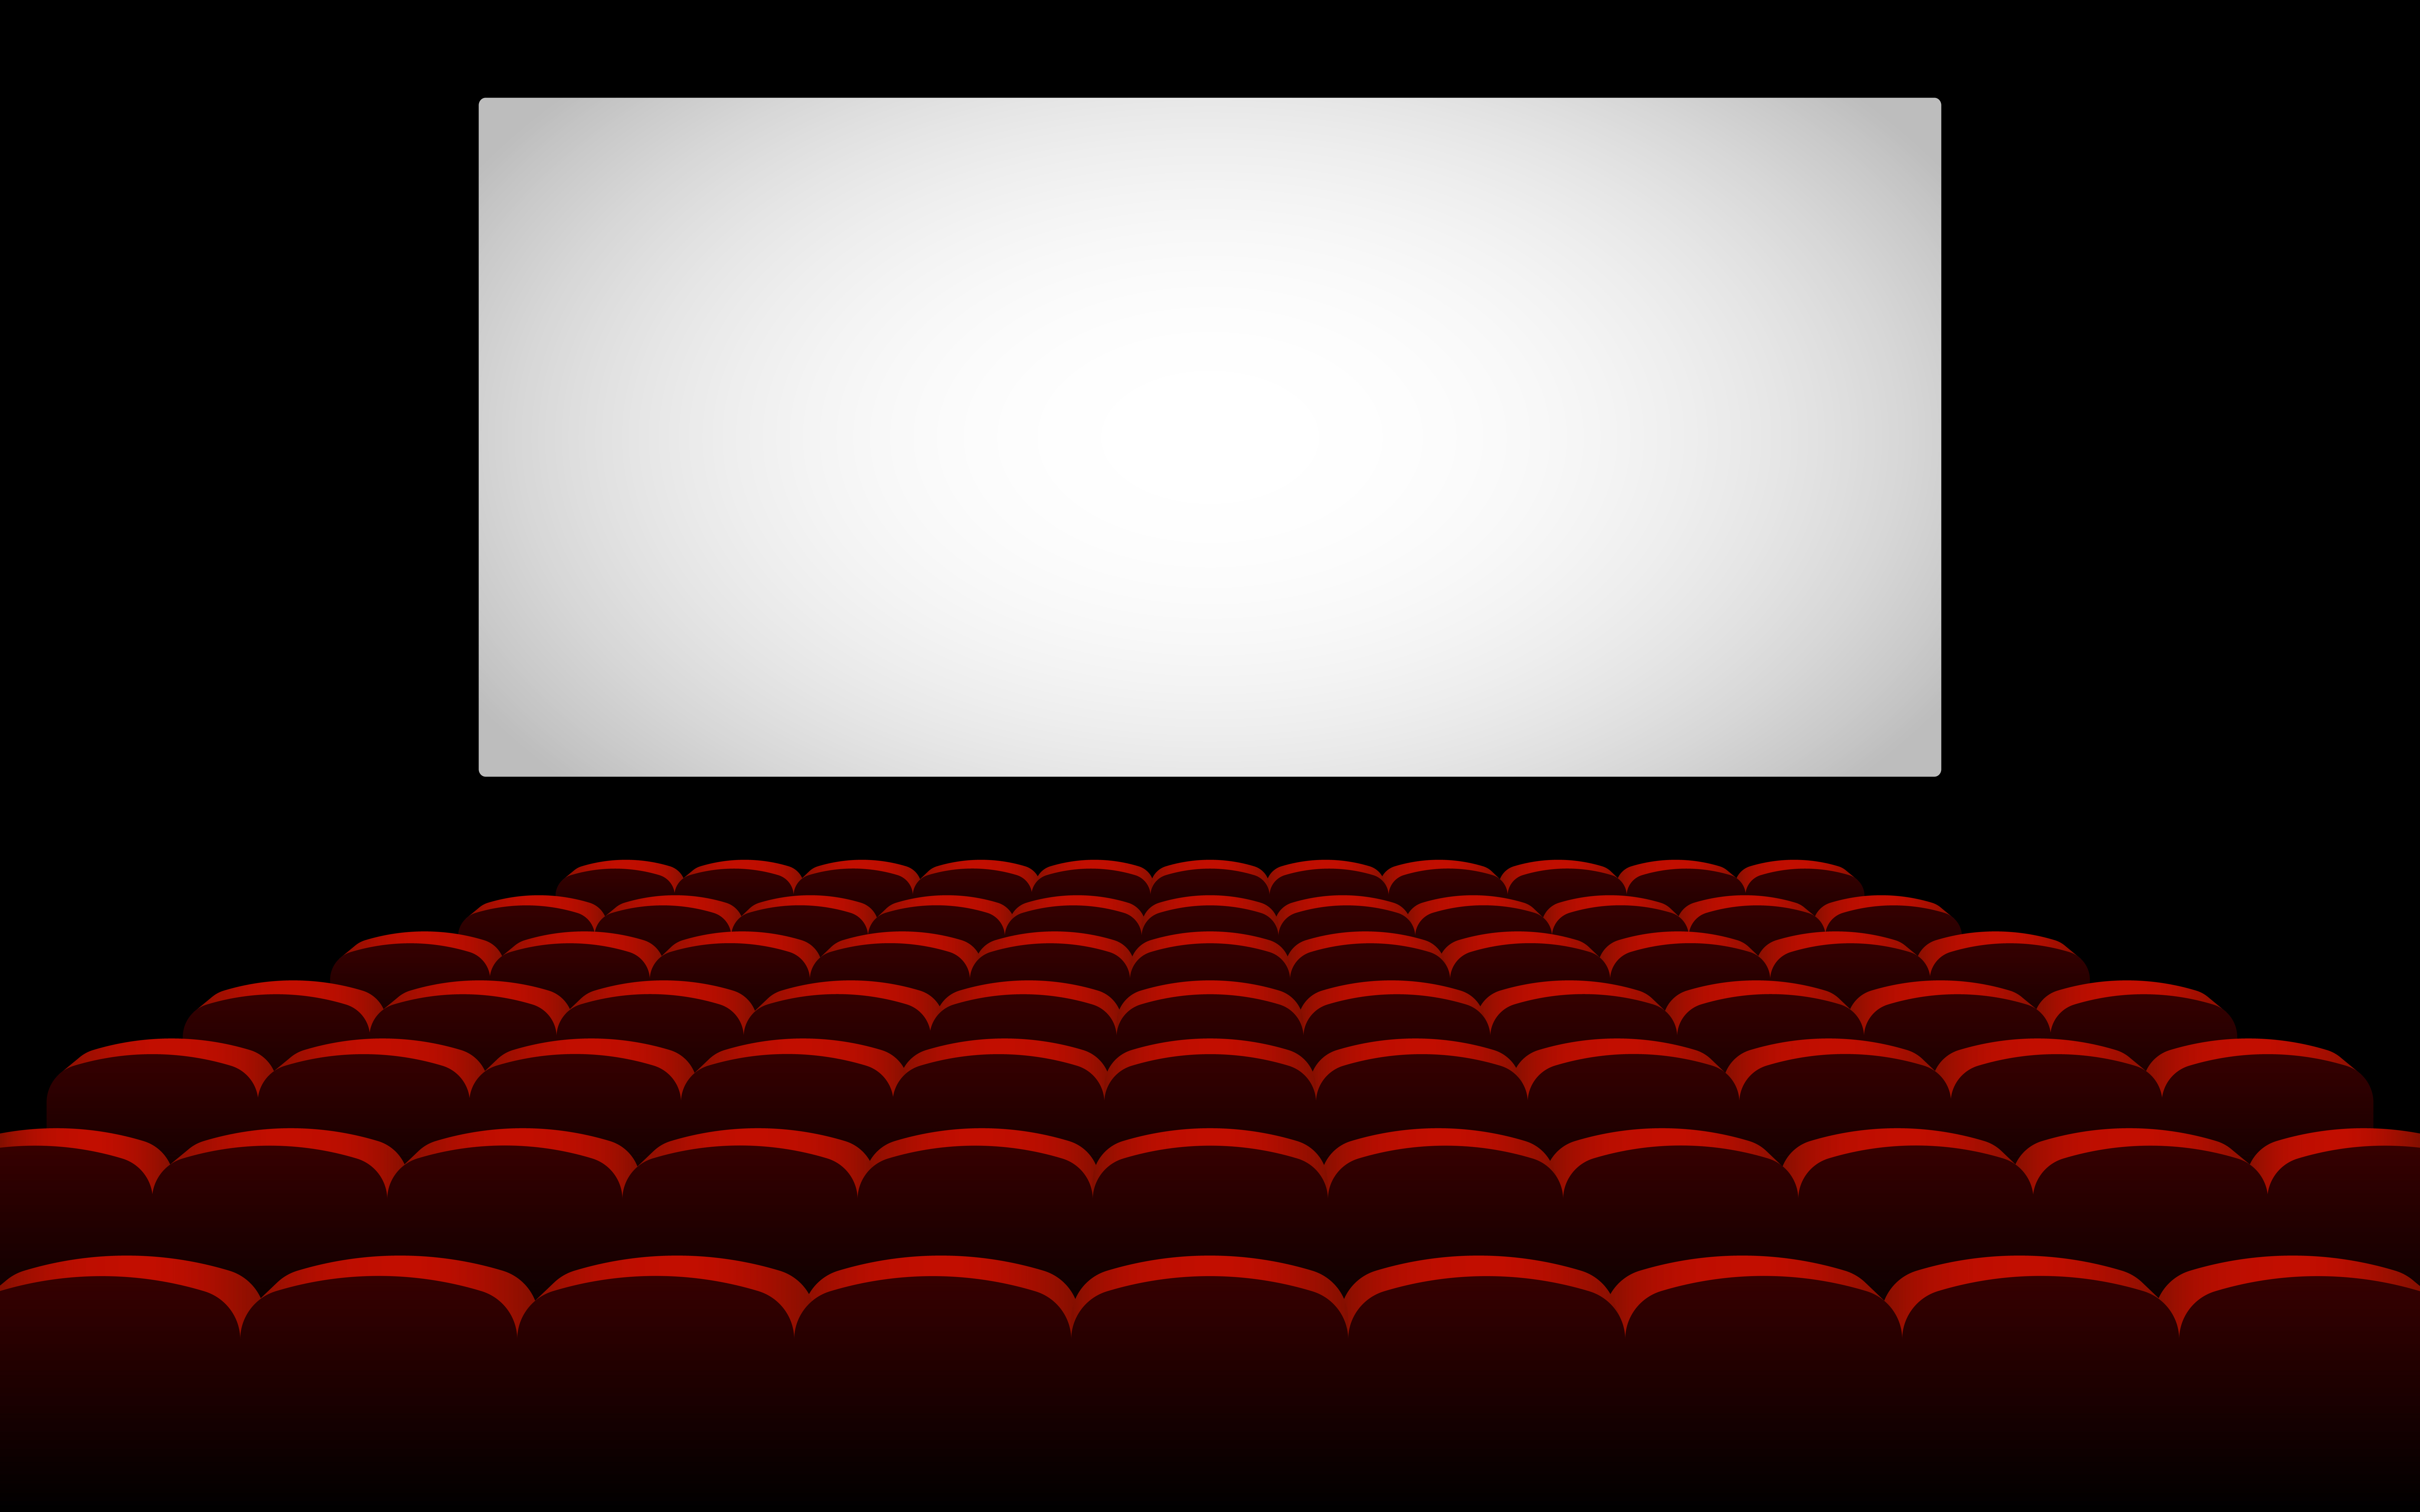 Cinema movie theater - Download Free Vectors, Clipart Graphics & Vector Art